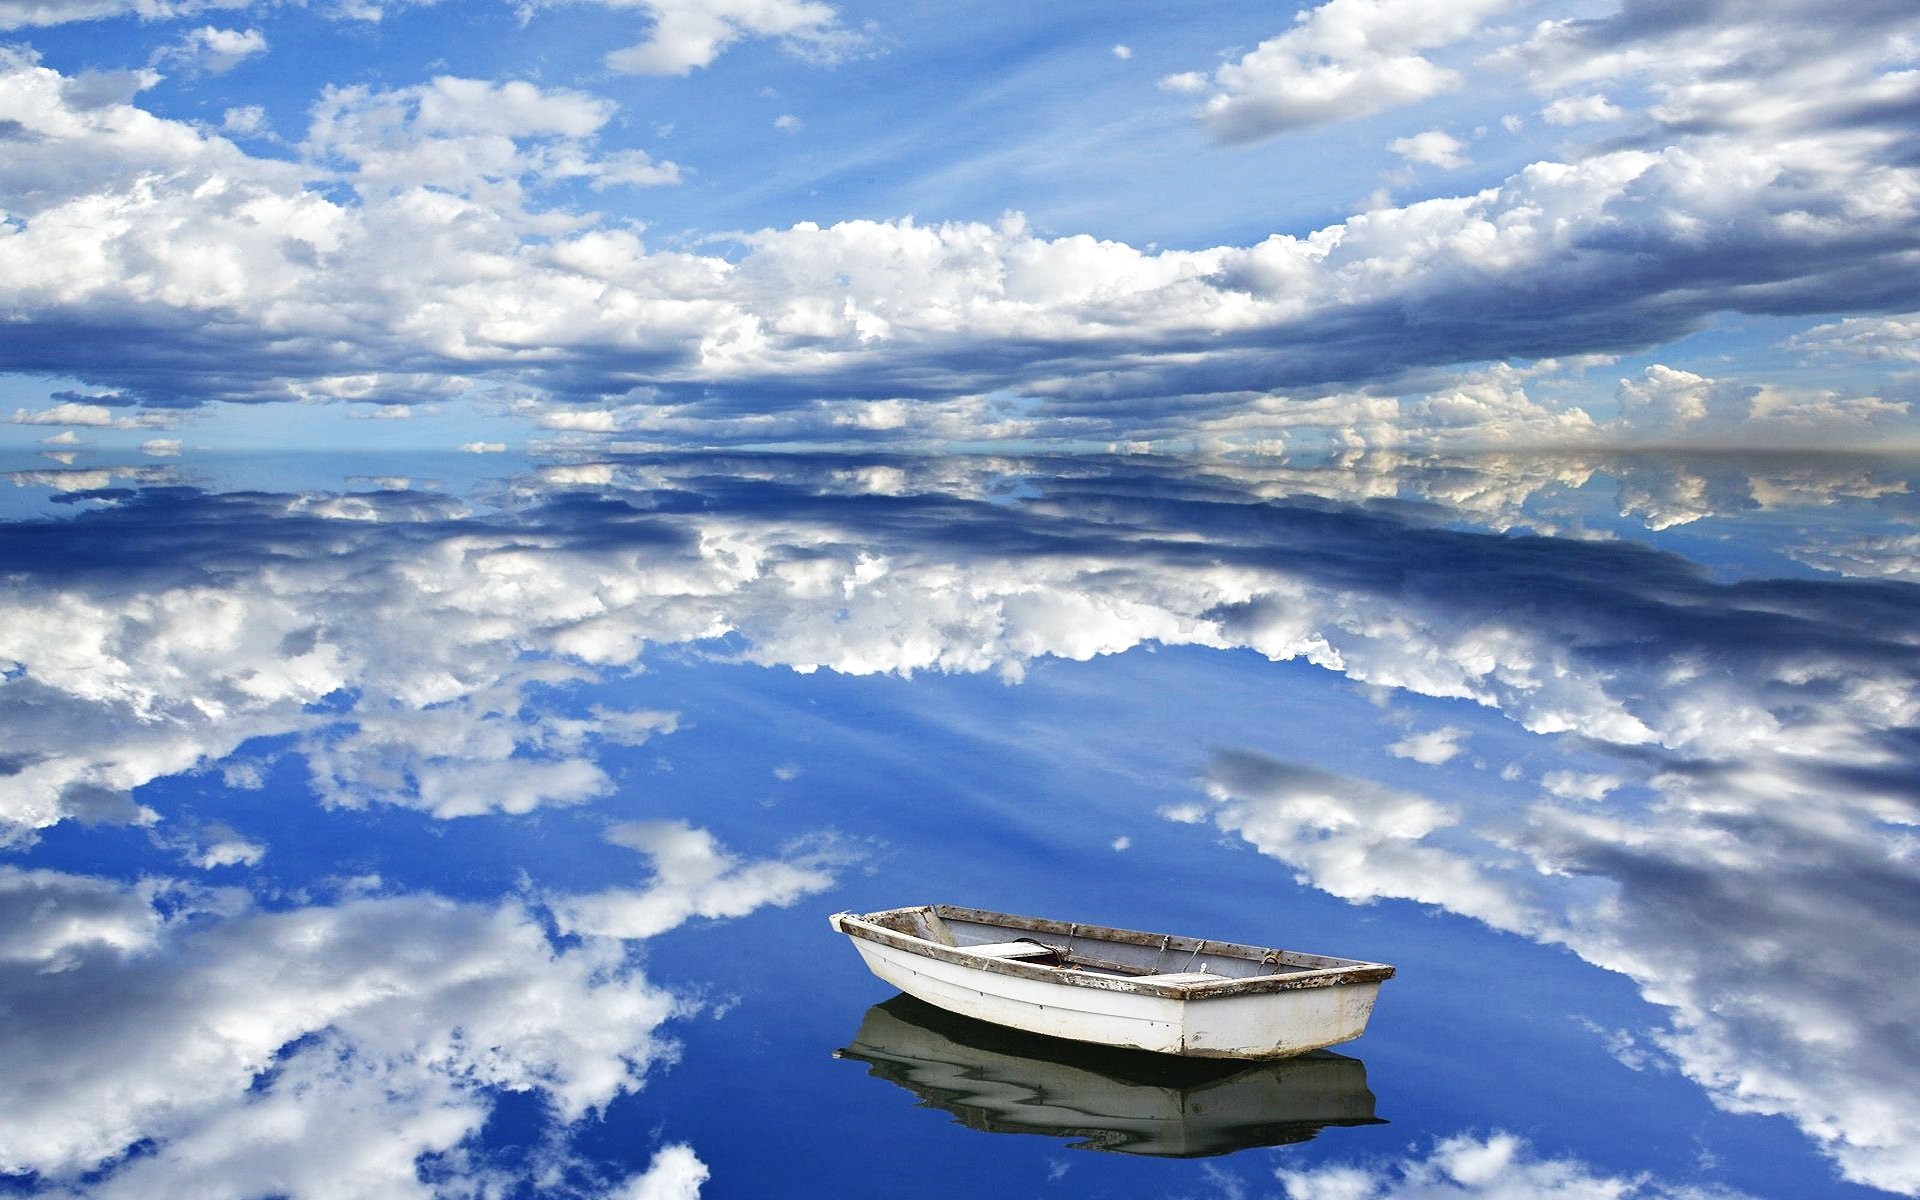 Отражение вода песни. Отражение неба в воде. Отражение облаков в воде. Море и небо. На воде и в небе.